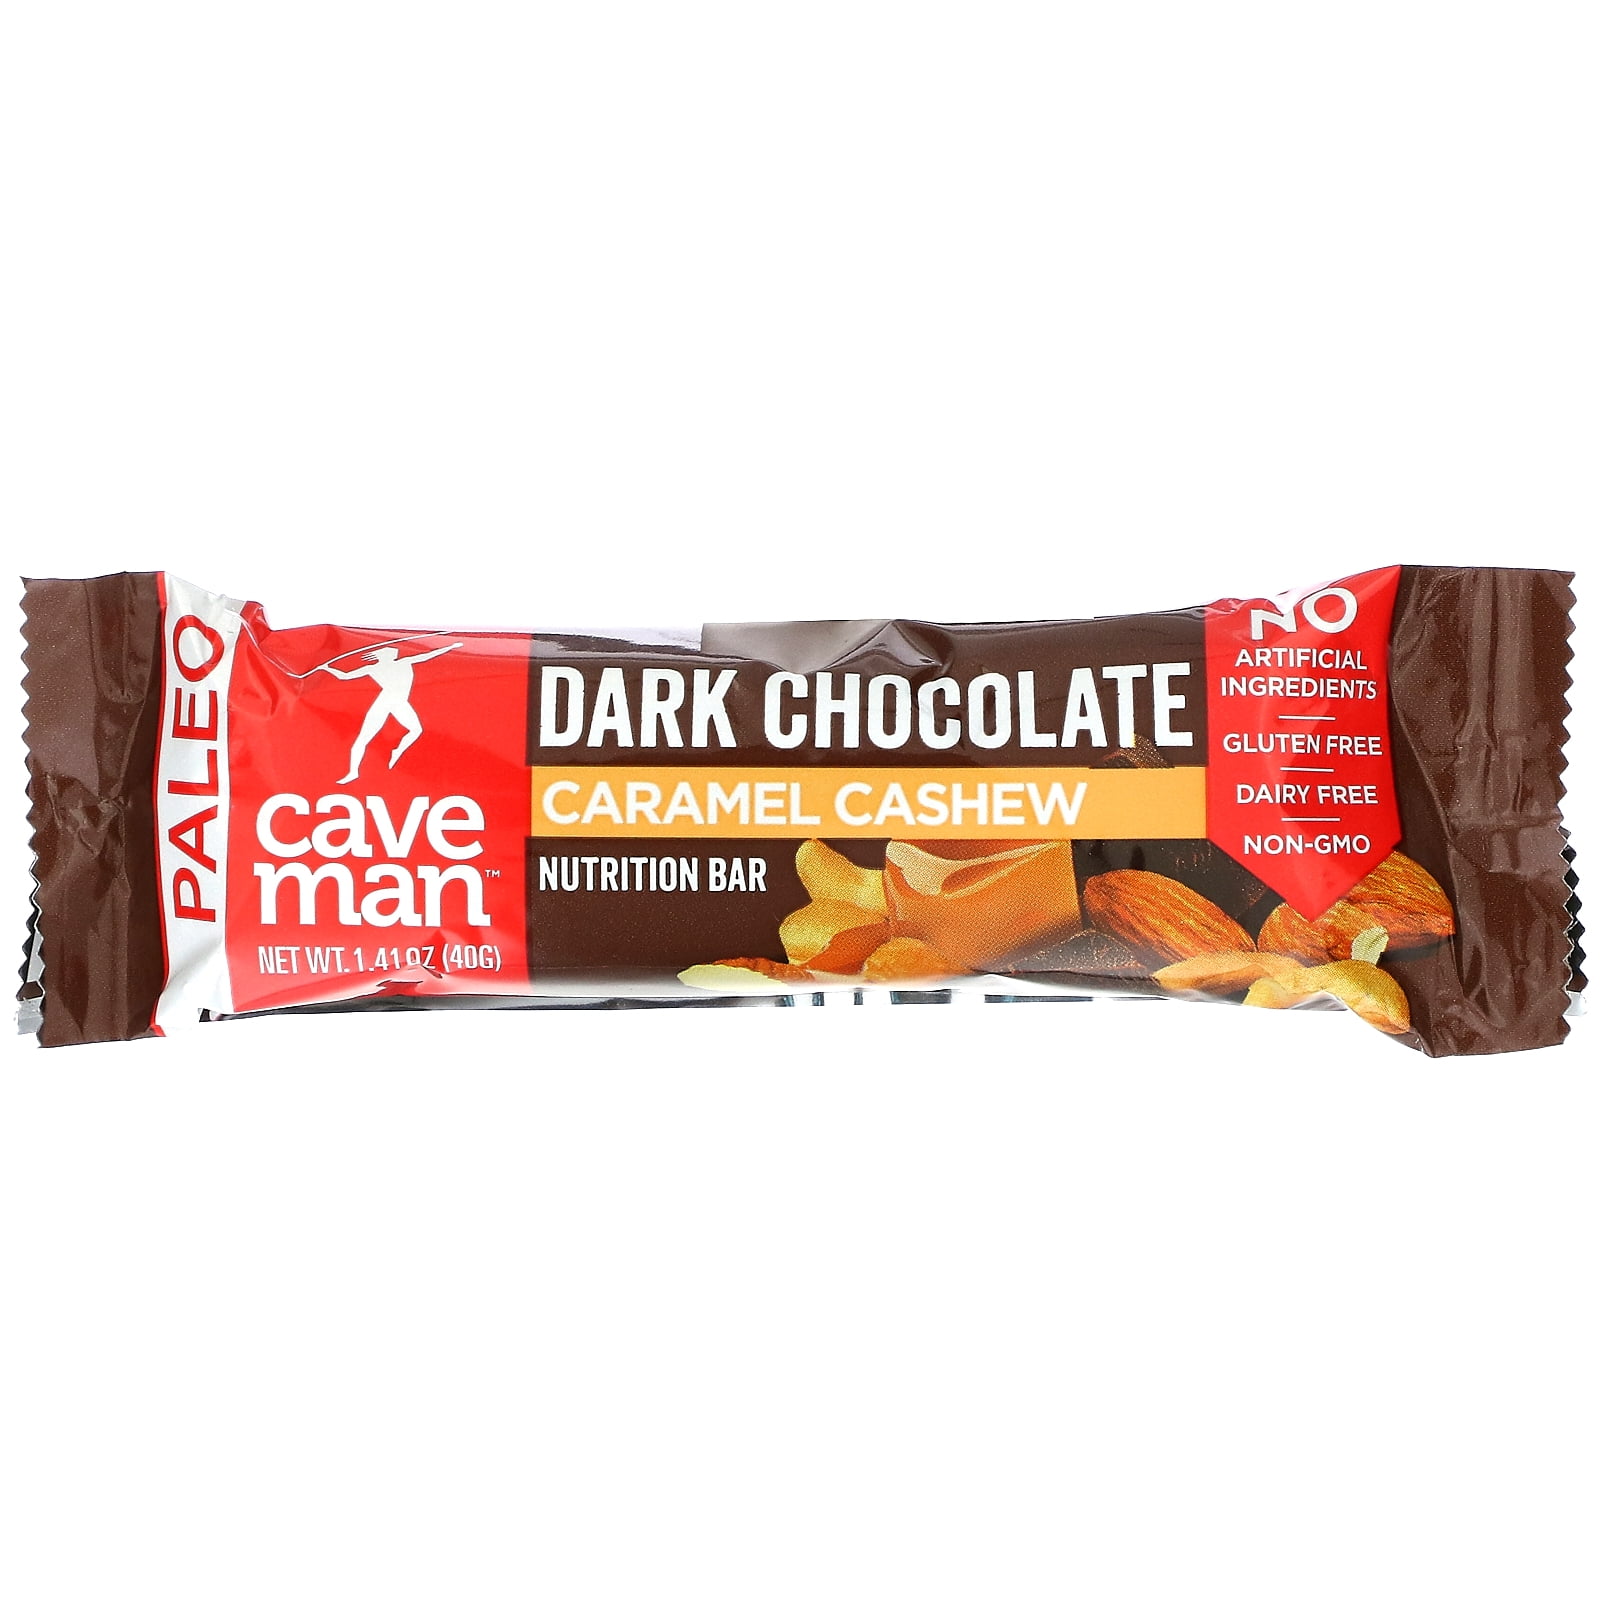 Dark Chocolate Caramel Cashew Nutrition Bars 12 Count